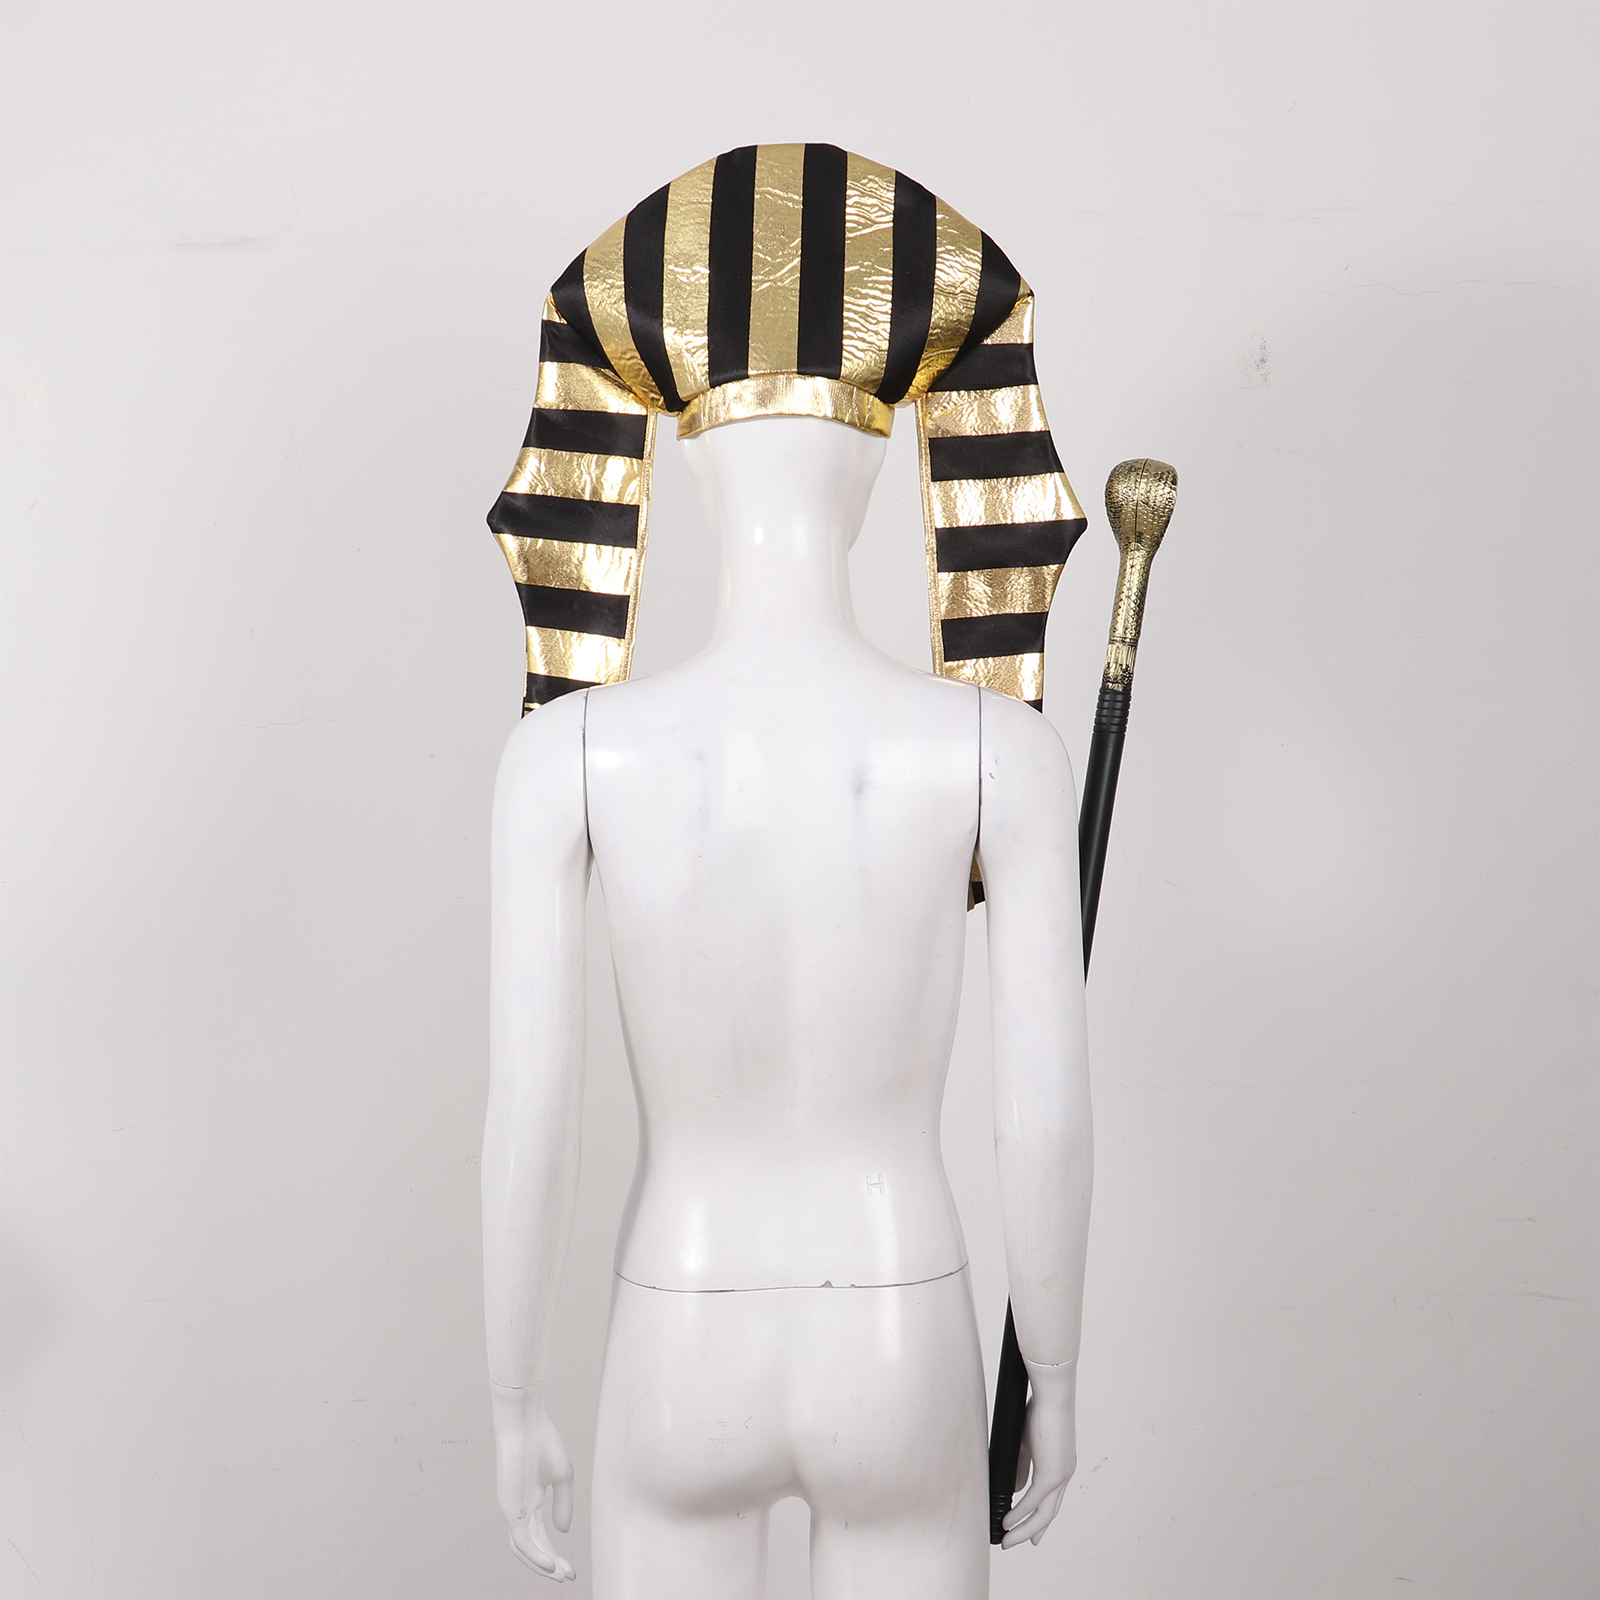 Hommes femmes anciennes accessoires de cosplay pharaon égyptien accessoire halloween garnits cléopâtre